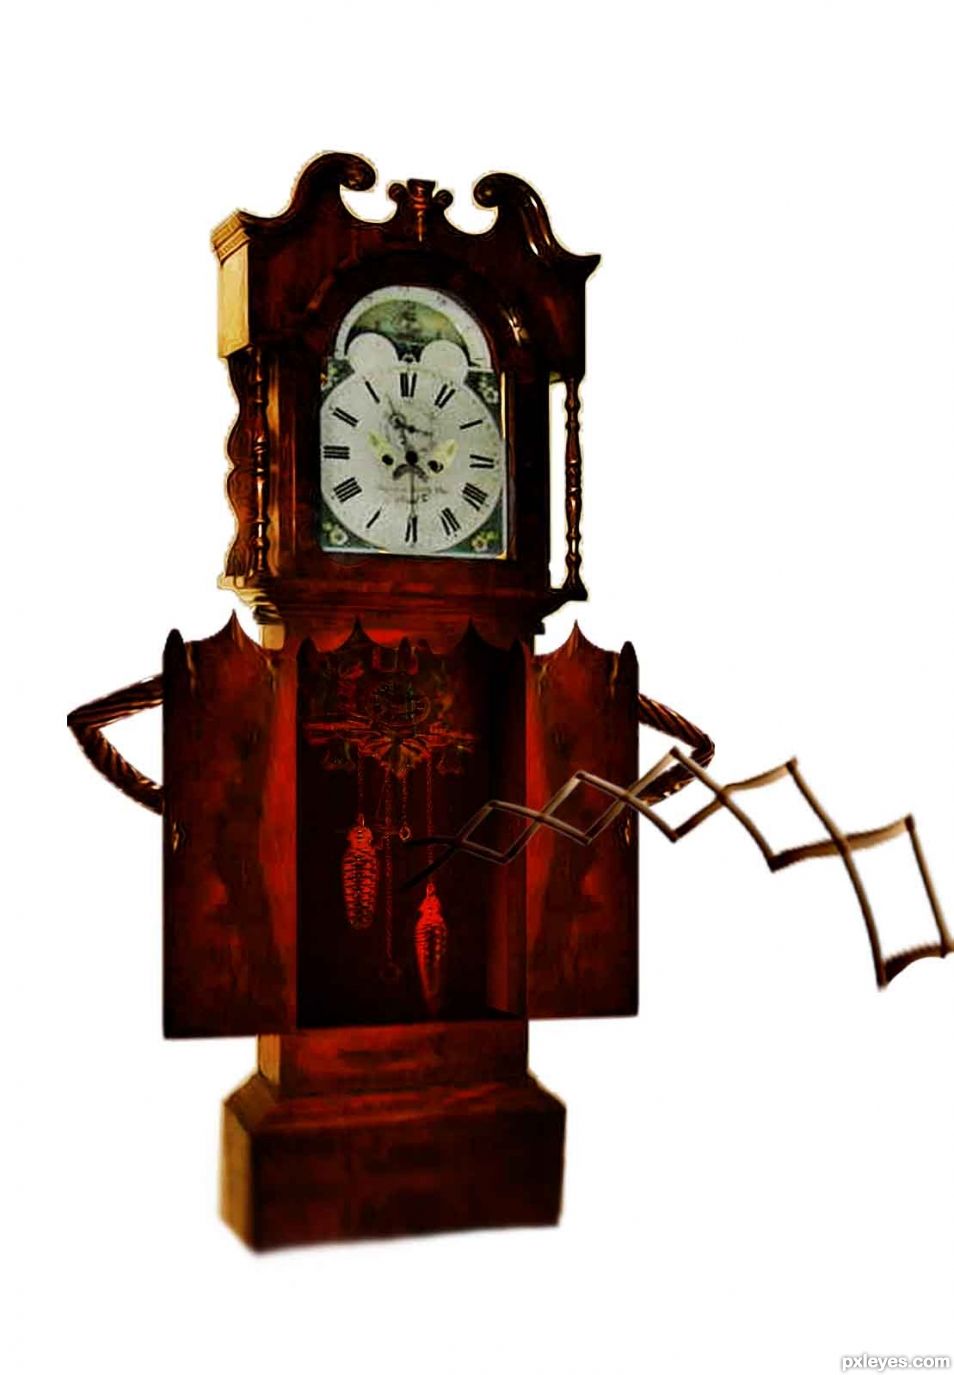 Creation of Alarmed Clock: Step 6